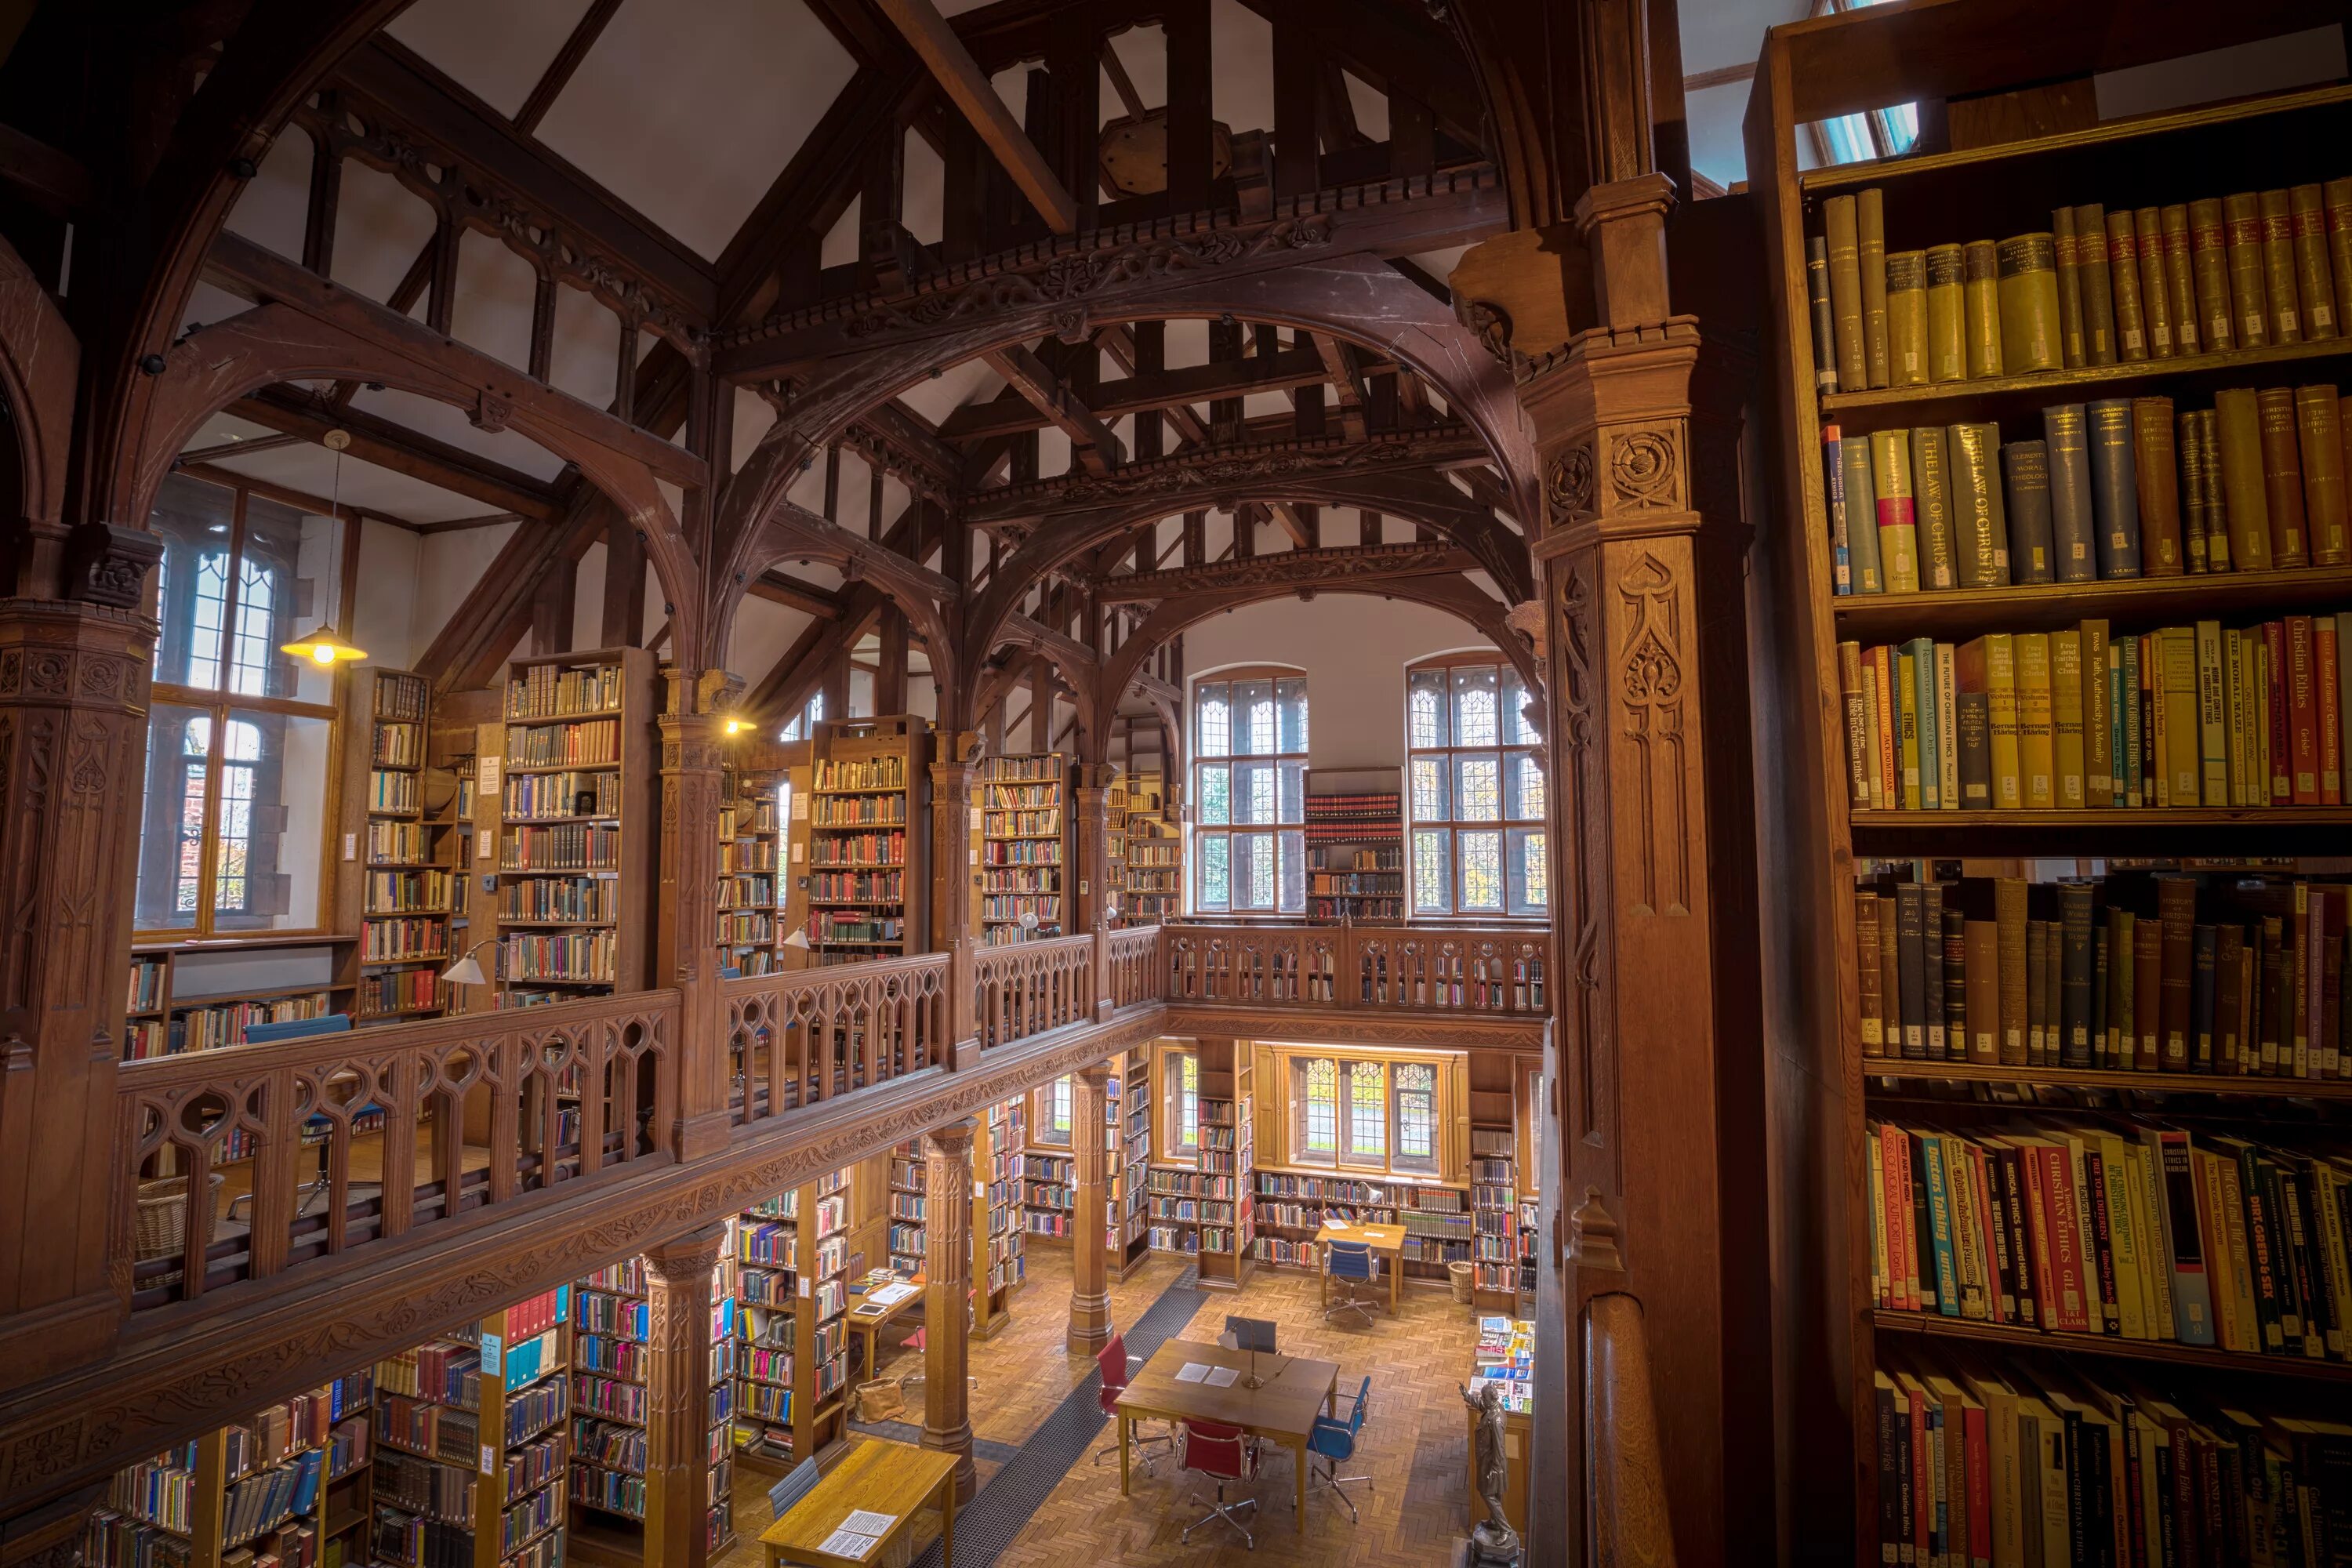 Библиотека Джорджа Пибоди, Балтимор, США. Библиотека аббатства Адмонт, Австрия. Старинная библиотека.